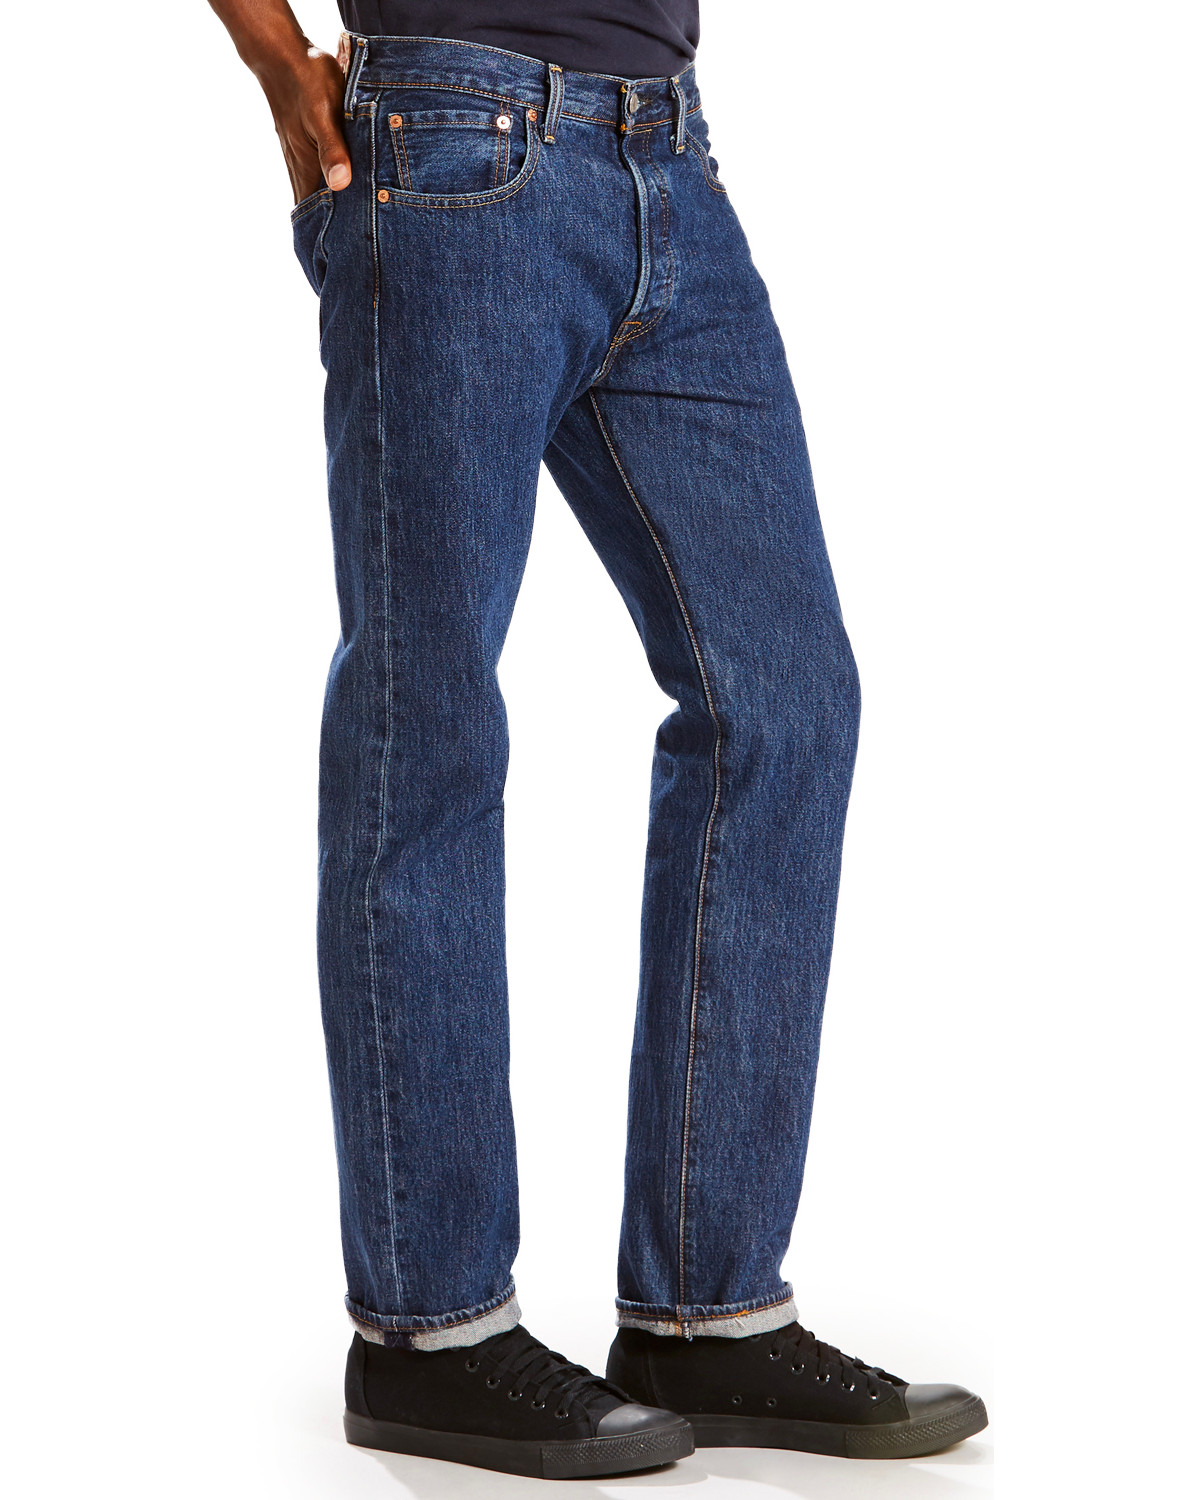 Levi's Men's 501 Original Straight Leg Jeans Dark Blue 34W x 32L  US - image 2 of 3